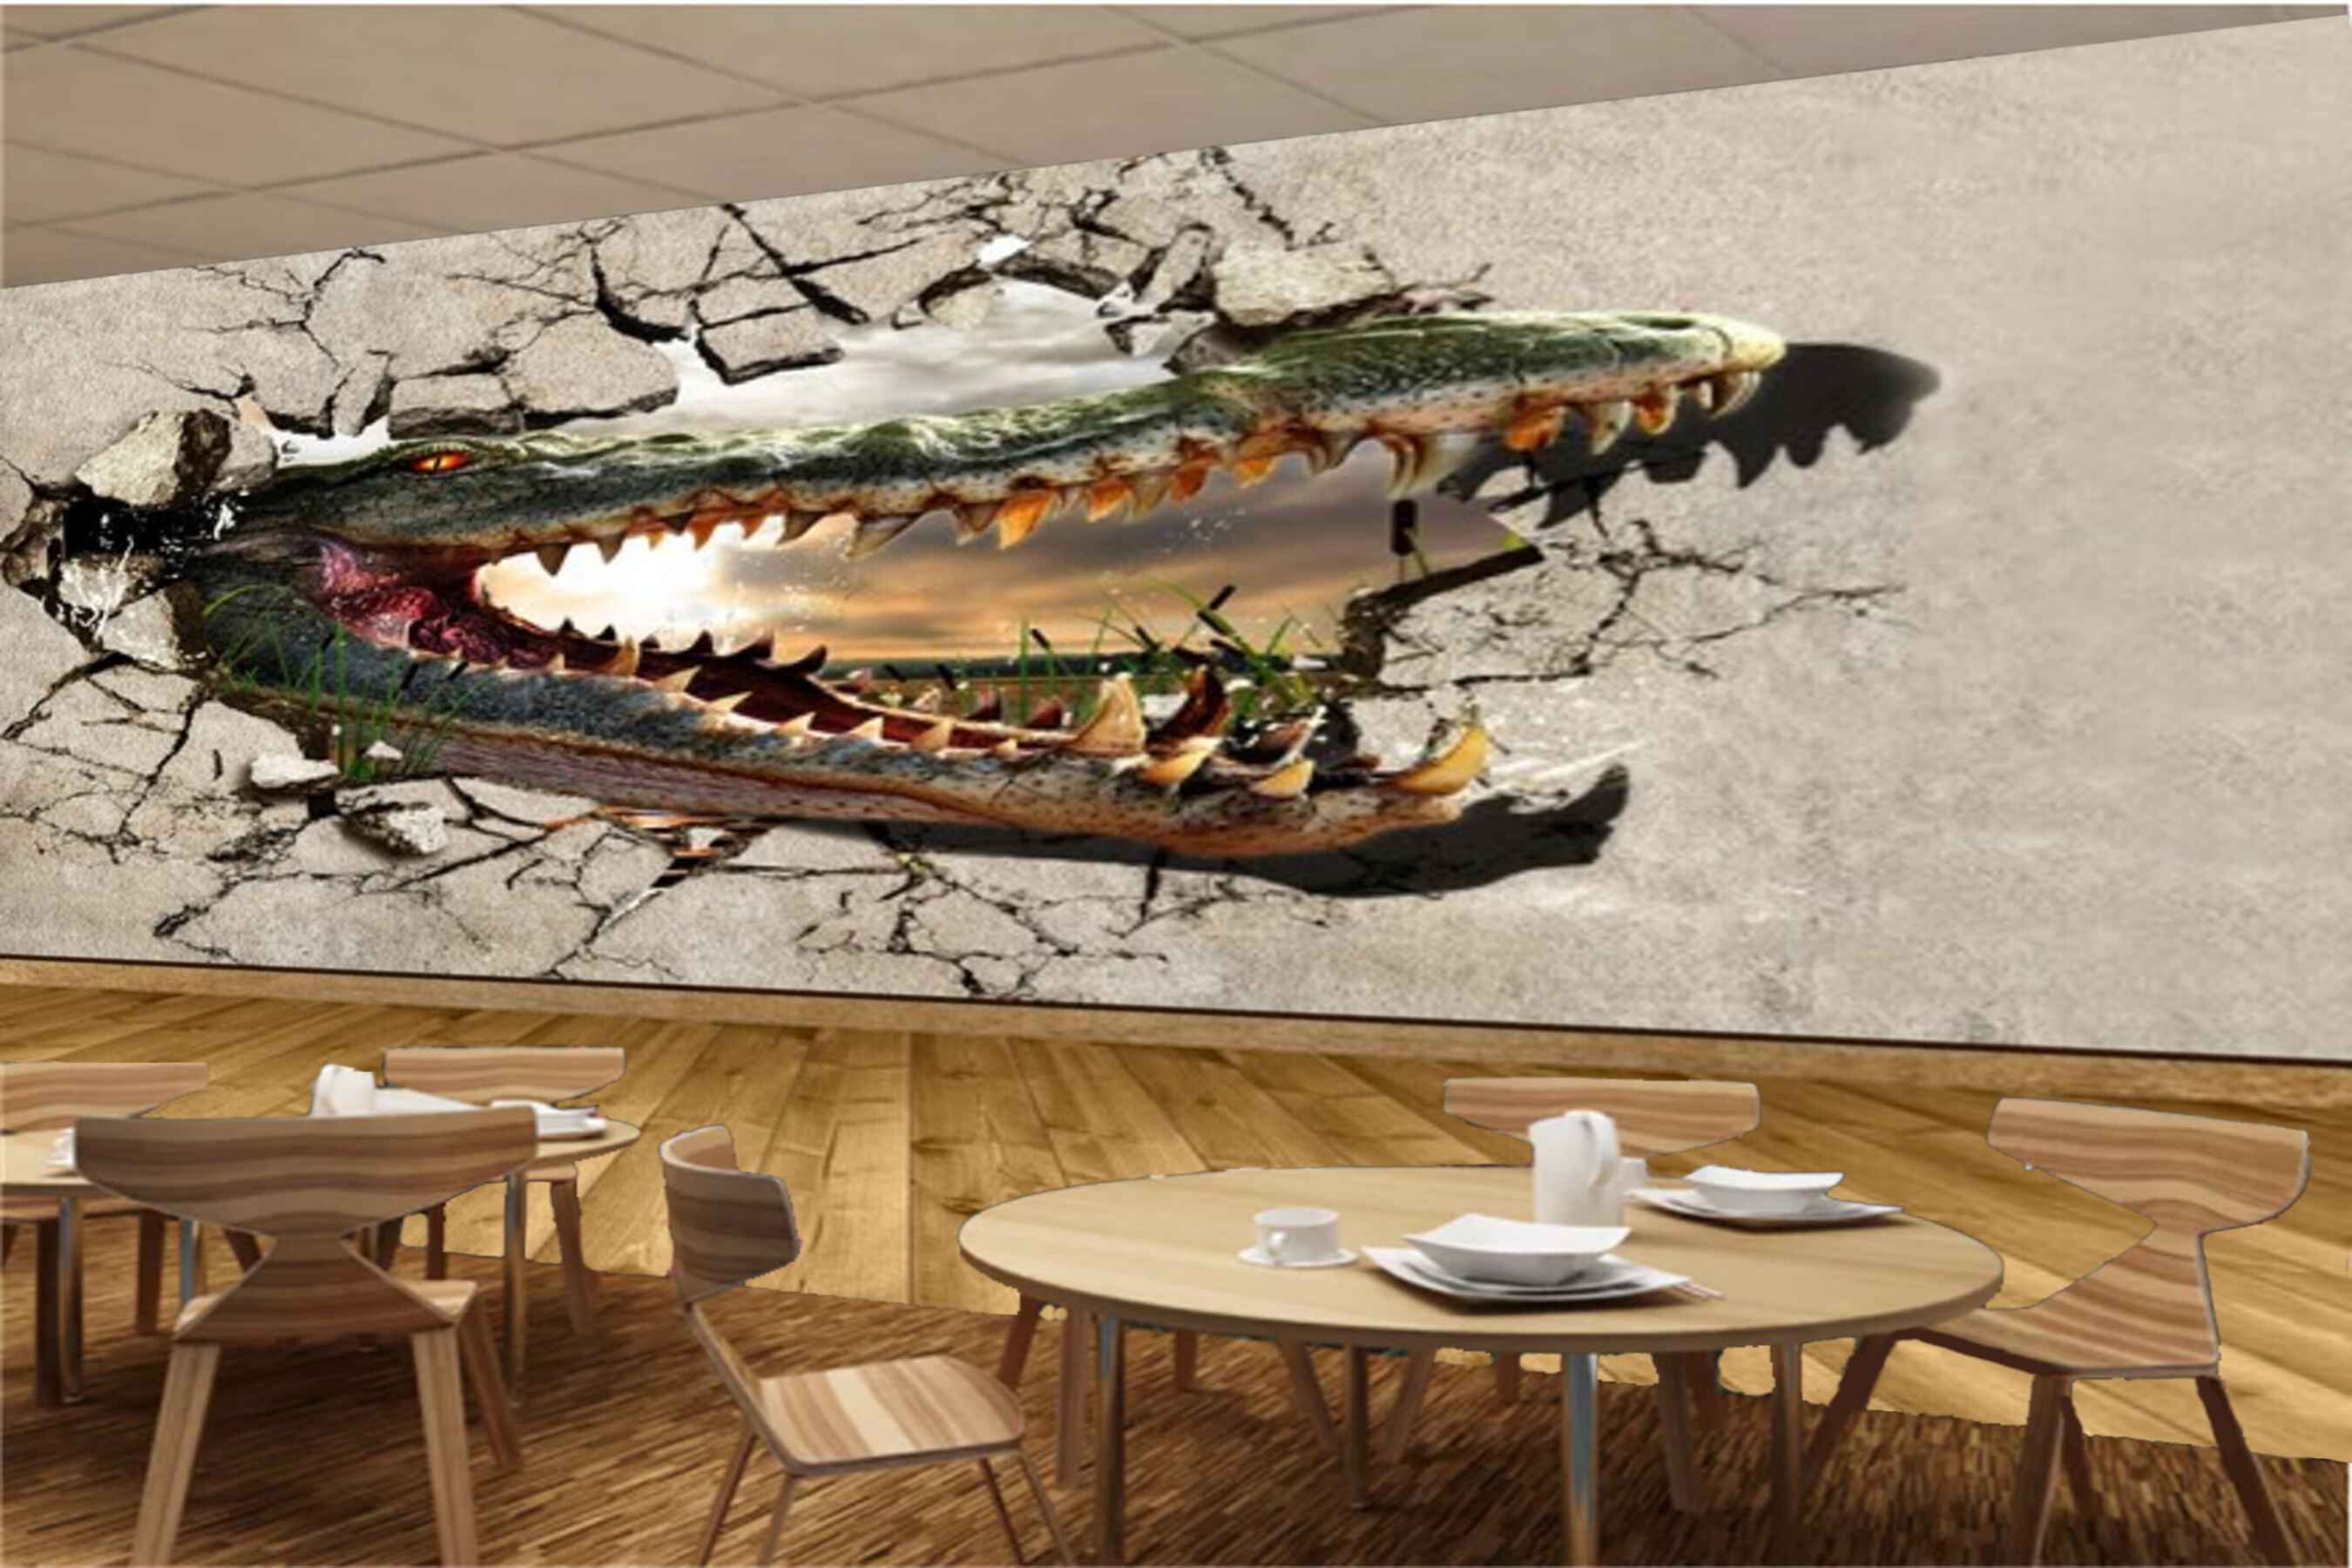 Avikalp MWZ3111 Crocodile Wall Break HD Wallpaper for Cafe Restaurant